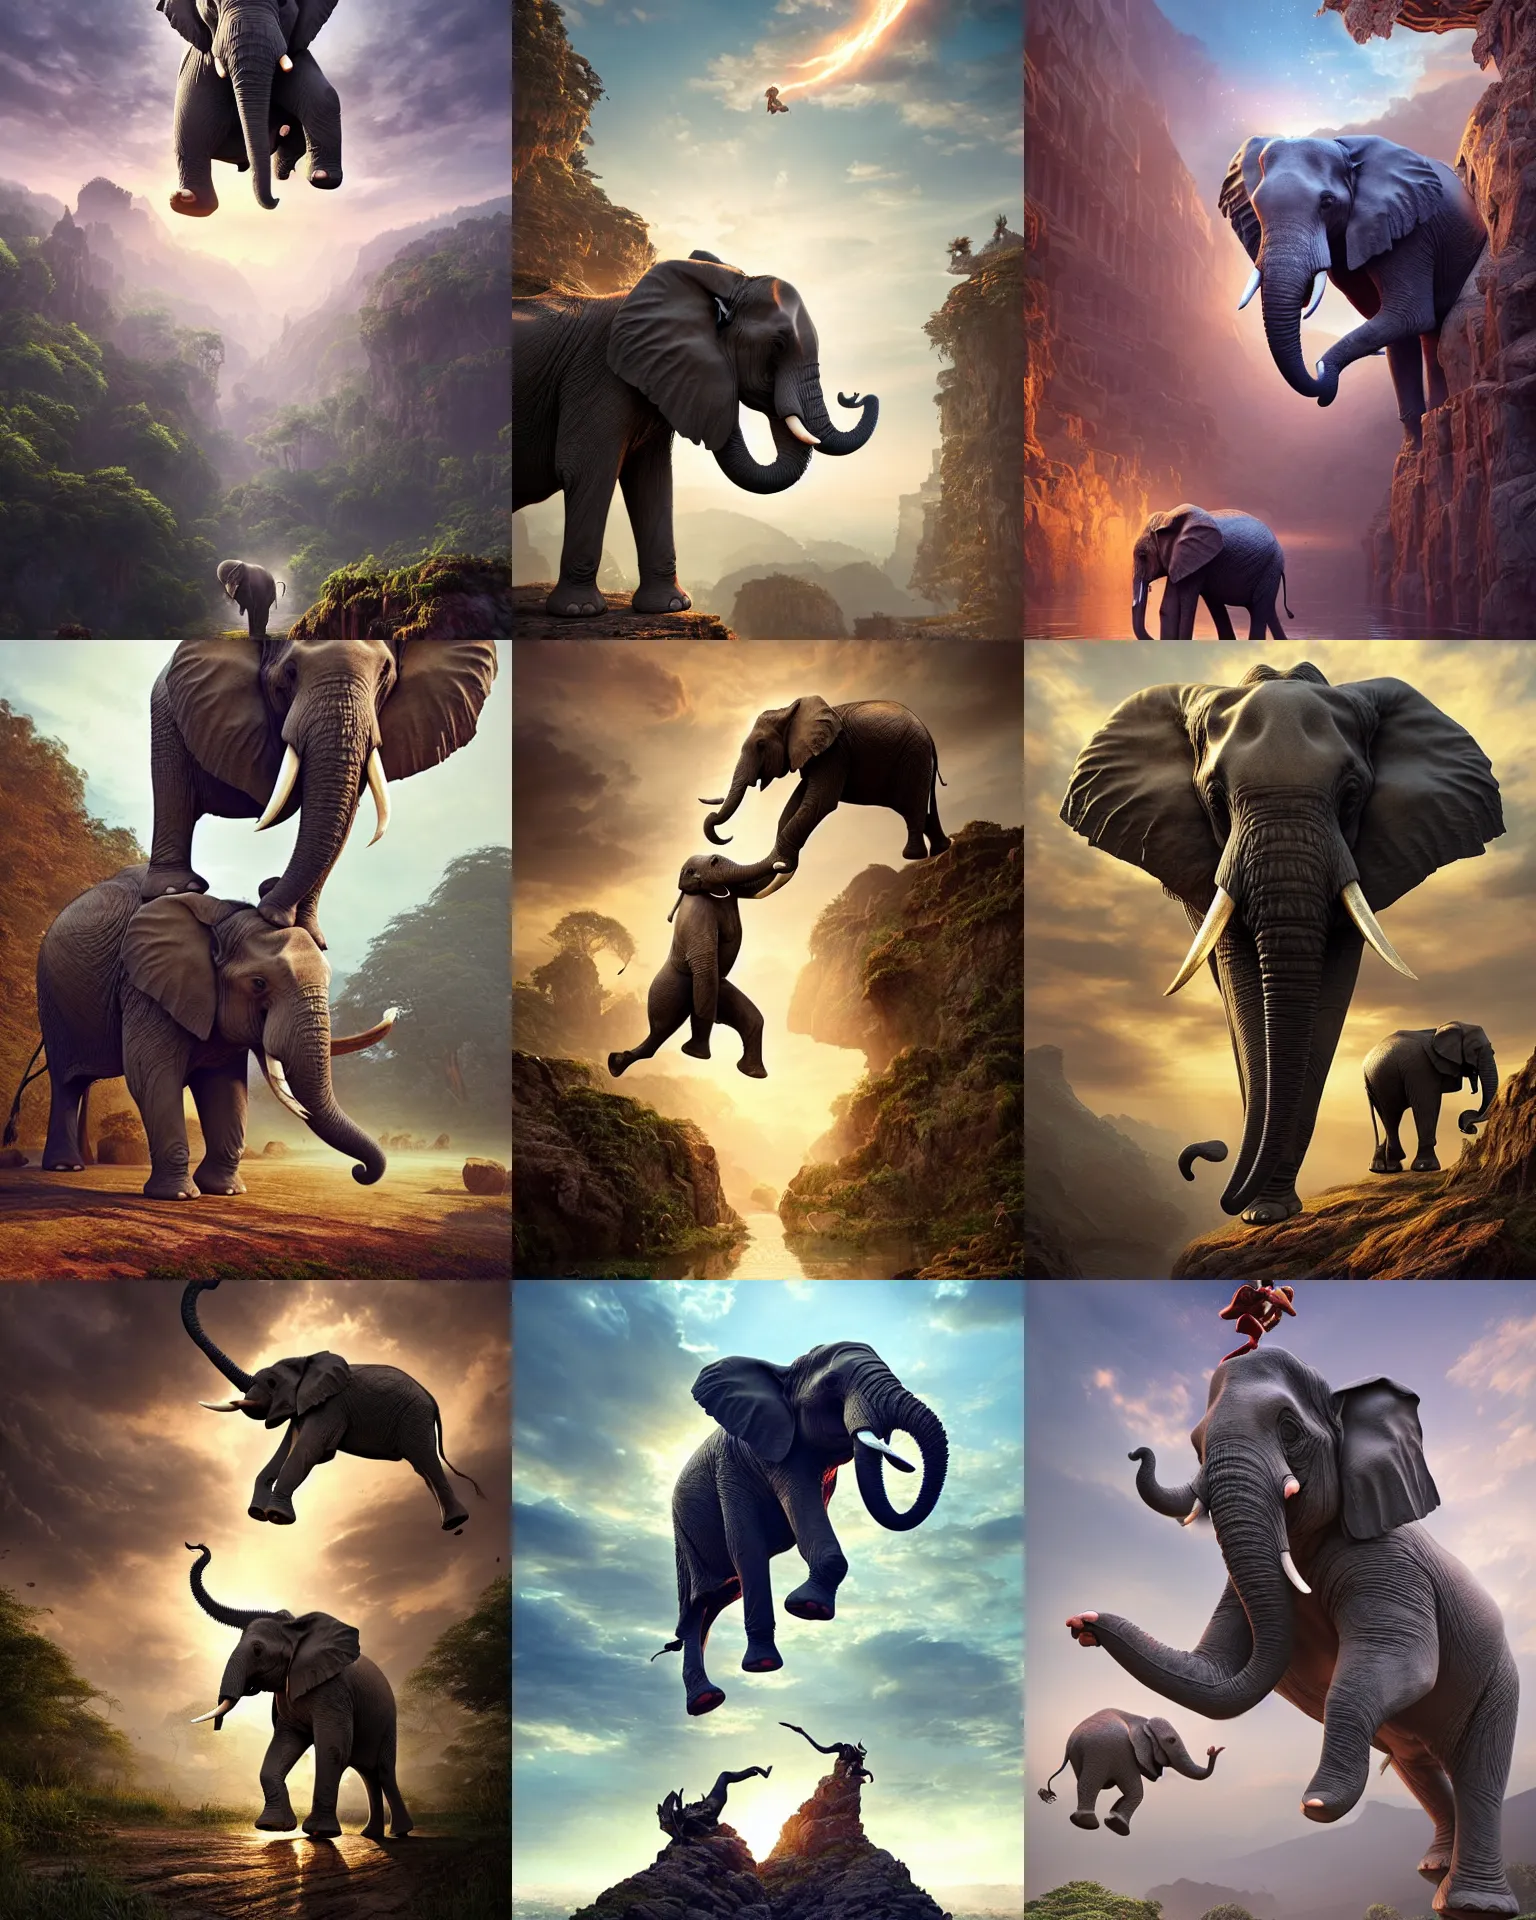 Prompt: elephant jumping, single elephant, fantasy, intricate, epic lighting, cinematic composition, hyper realistic, 8 k resolution, unreal engine 5, by artgerm, tooth wu, dan mumford, beeple, wlop, rossdraws, james jean, marc simonetti, artstation